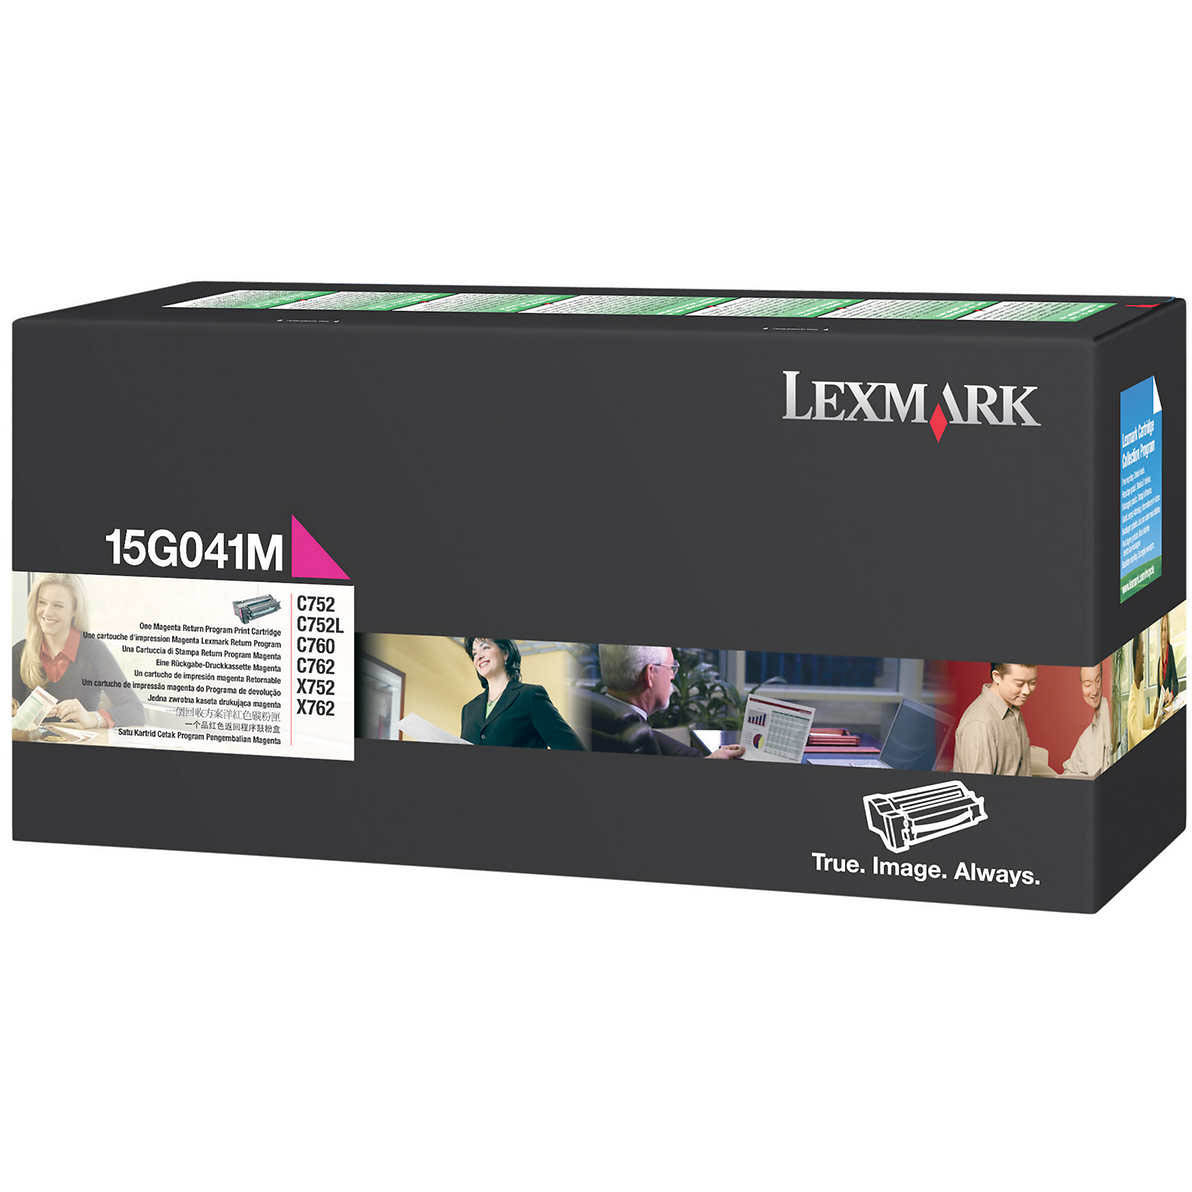 Original Lexmark 15G041M Magenta Toner Cartridge (15G041M)